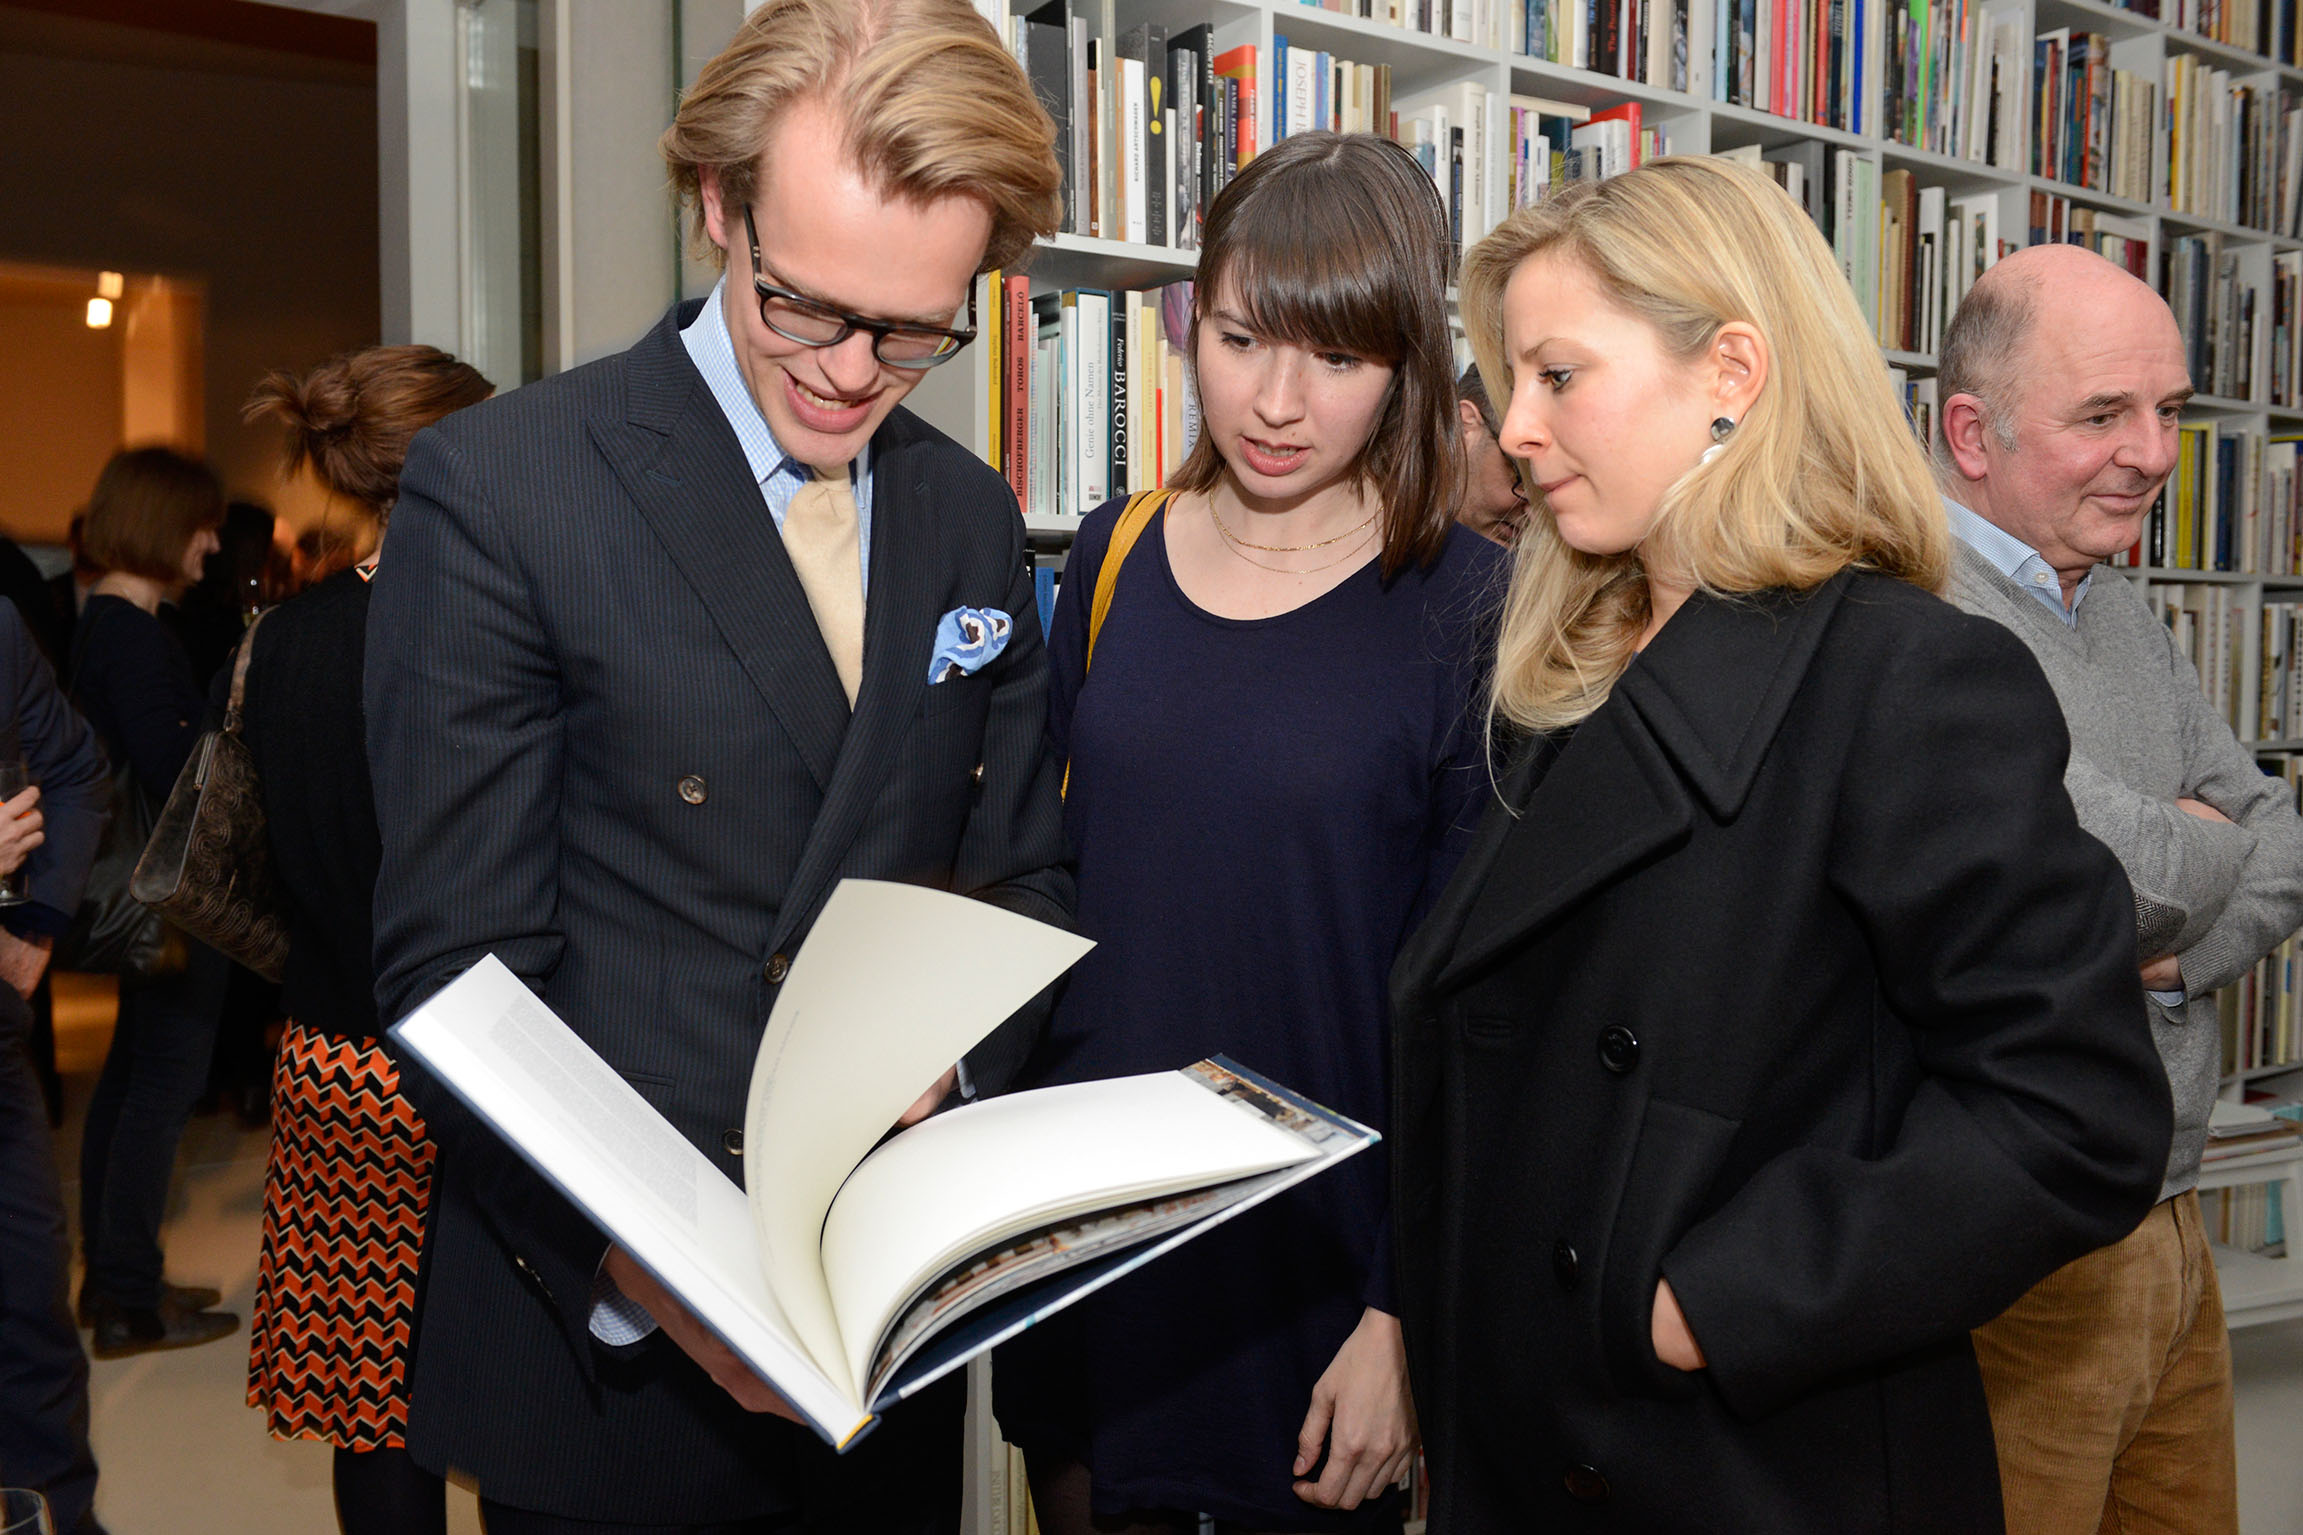 Sebastian H., Beate Scheder, and Jana Bach Photo: Tobias Kleinod, Courtesy Weltkunst